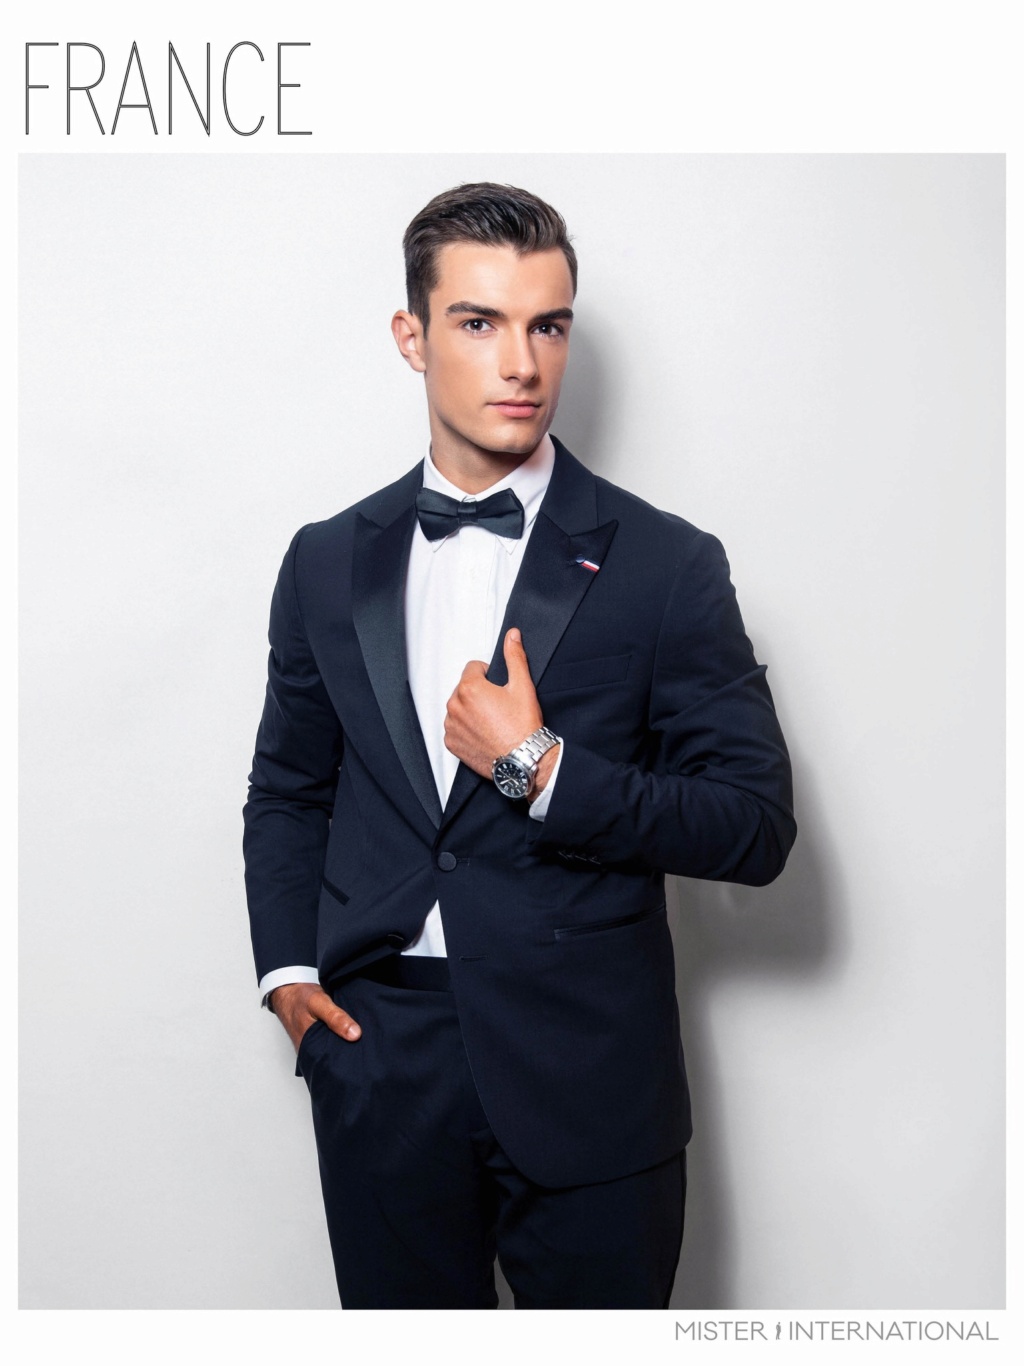 Mister International 2022 - Formal Wear Portraits! 31340910